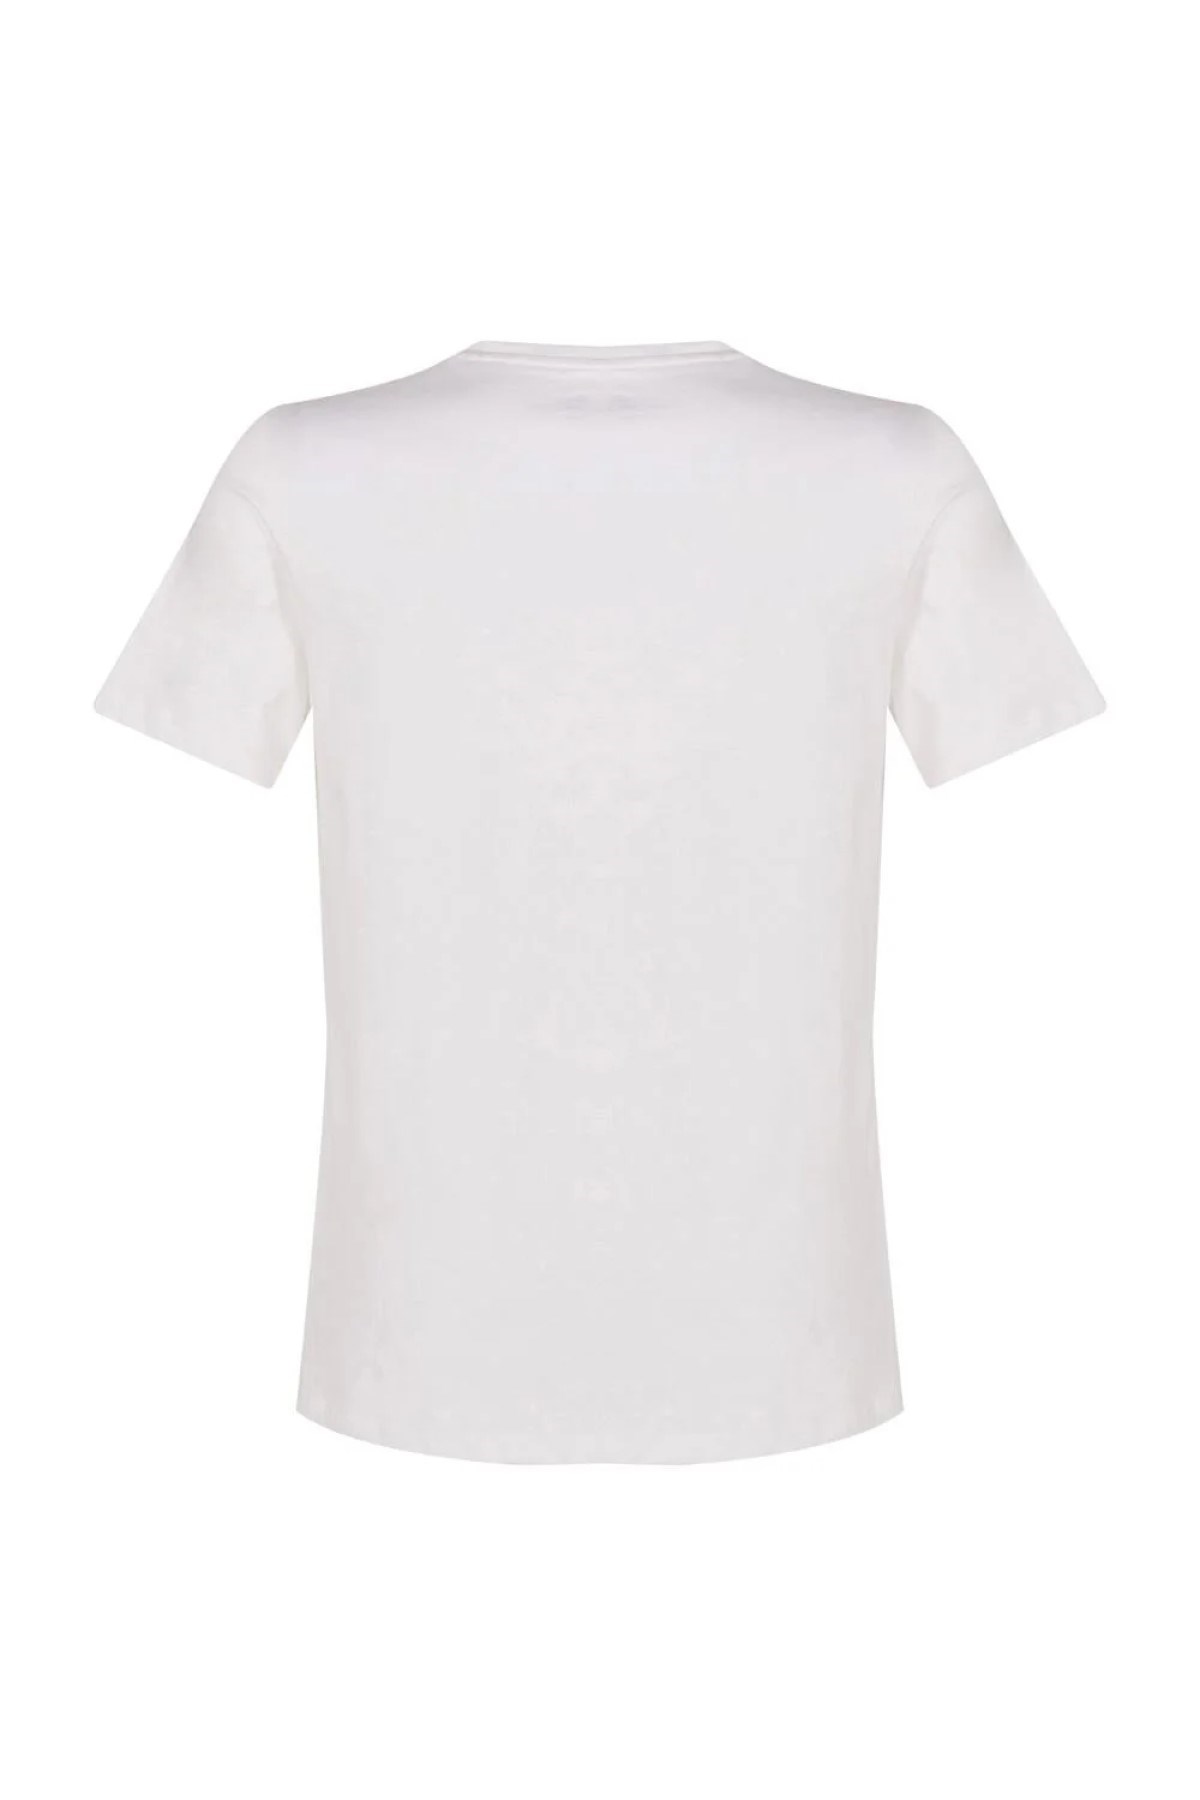 New Balance Erkek T-Shirt MNT1234-WT Whıte